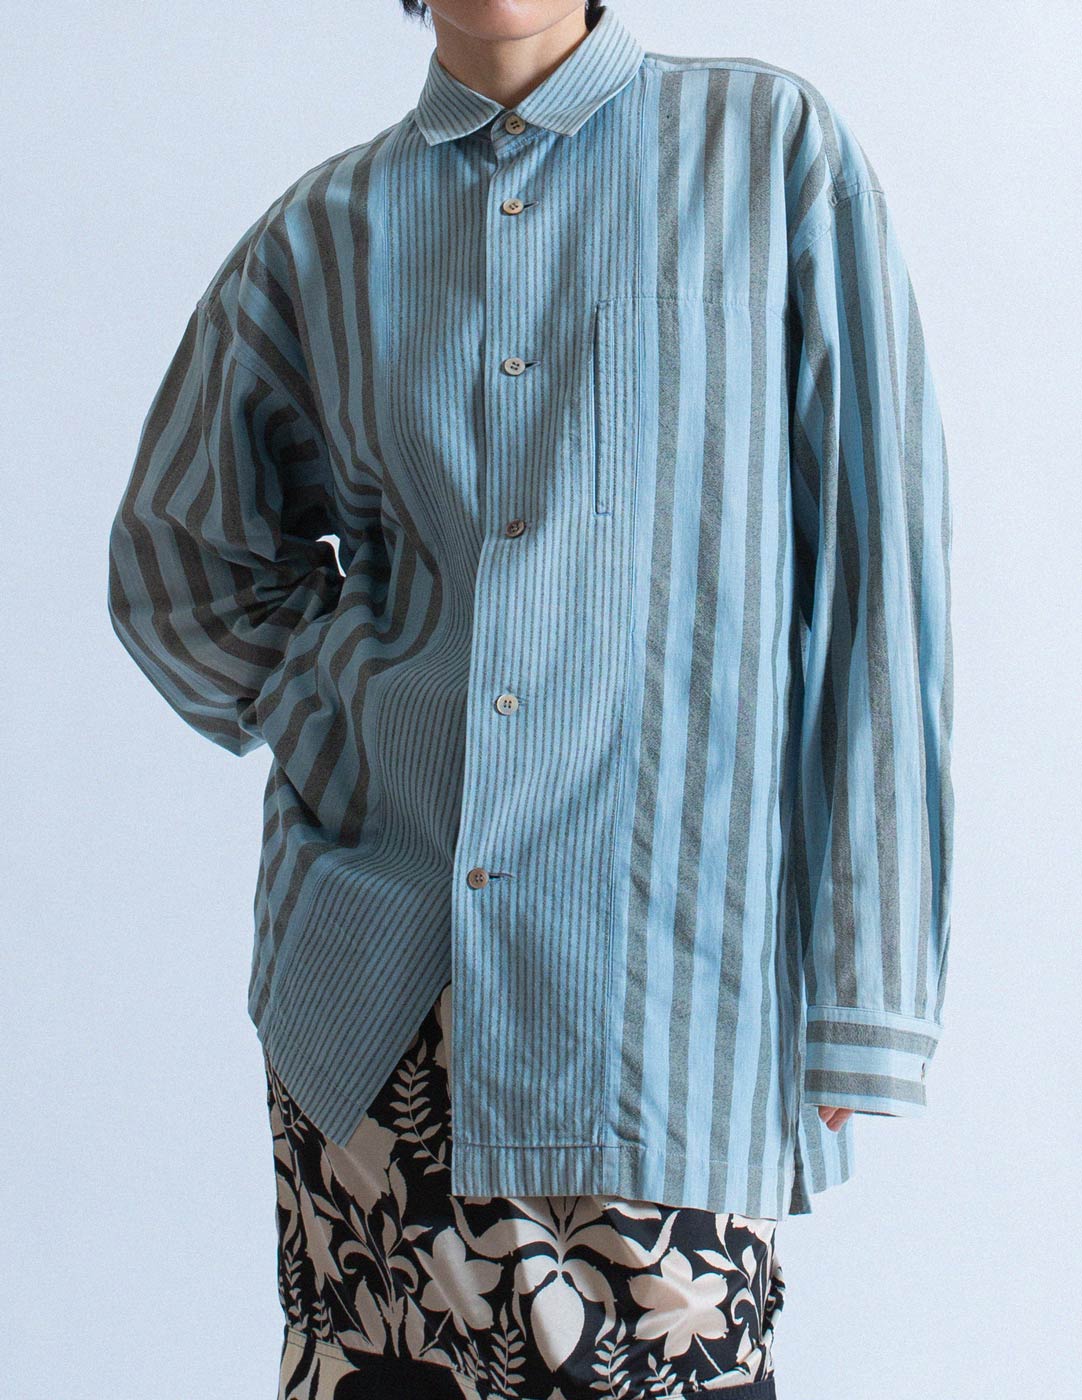 Issey Miyake vintage striped oversized shirt front detail